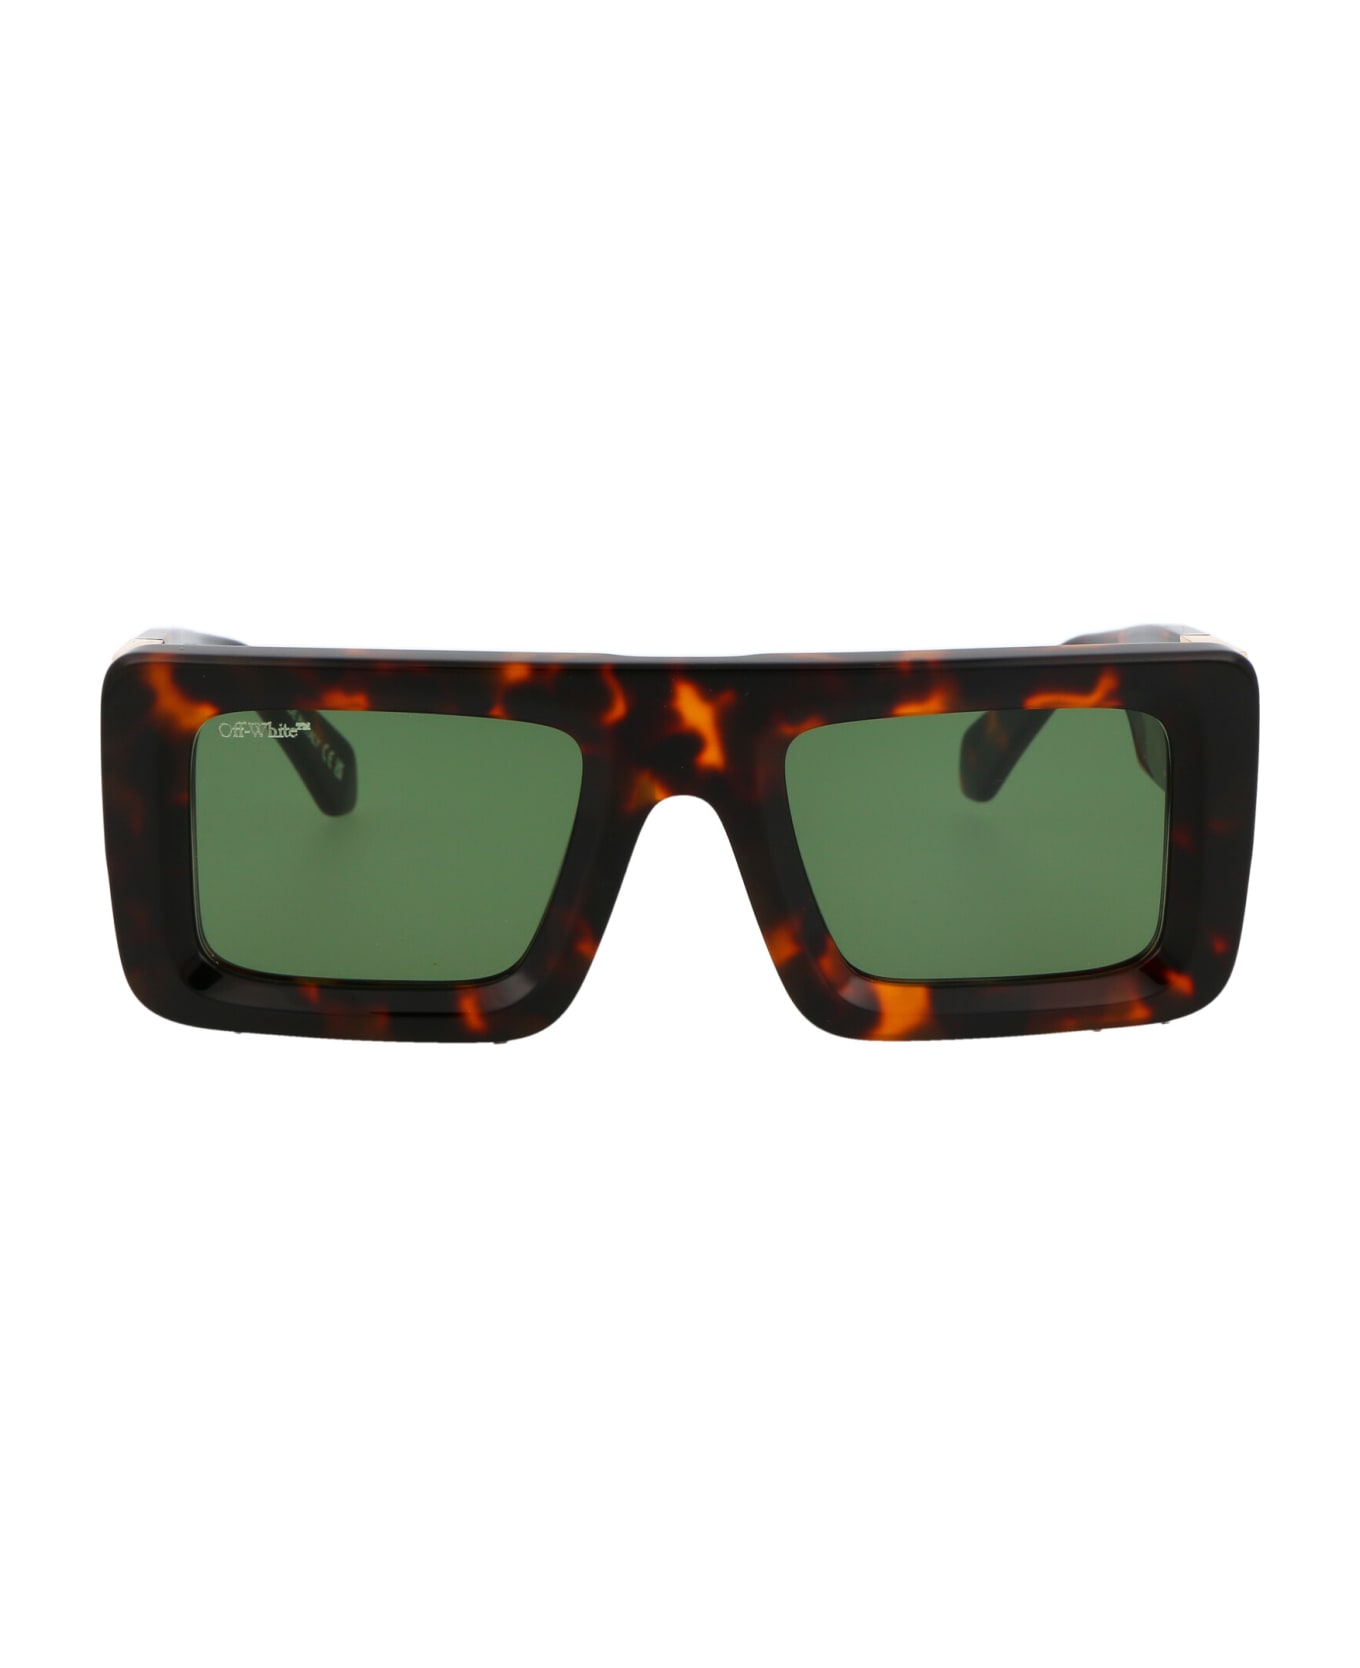 Off-White Leonardo Sunglasses - 6055 HAVANA GREEN サングラス